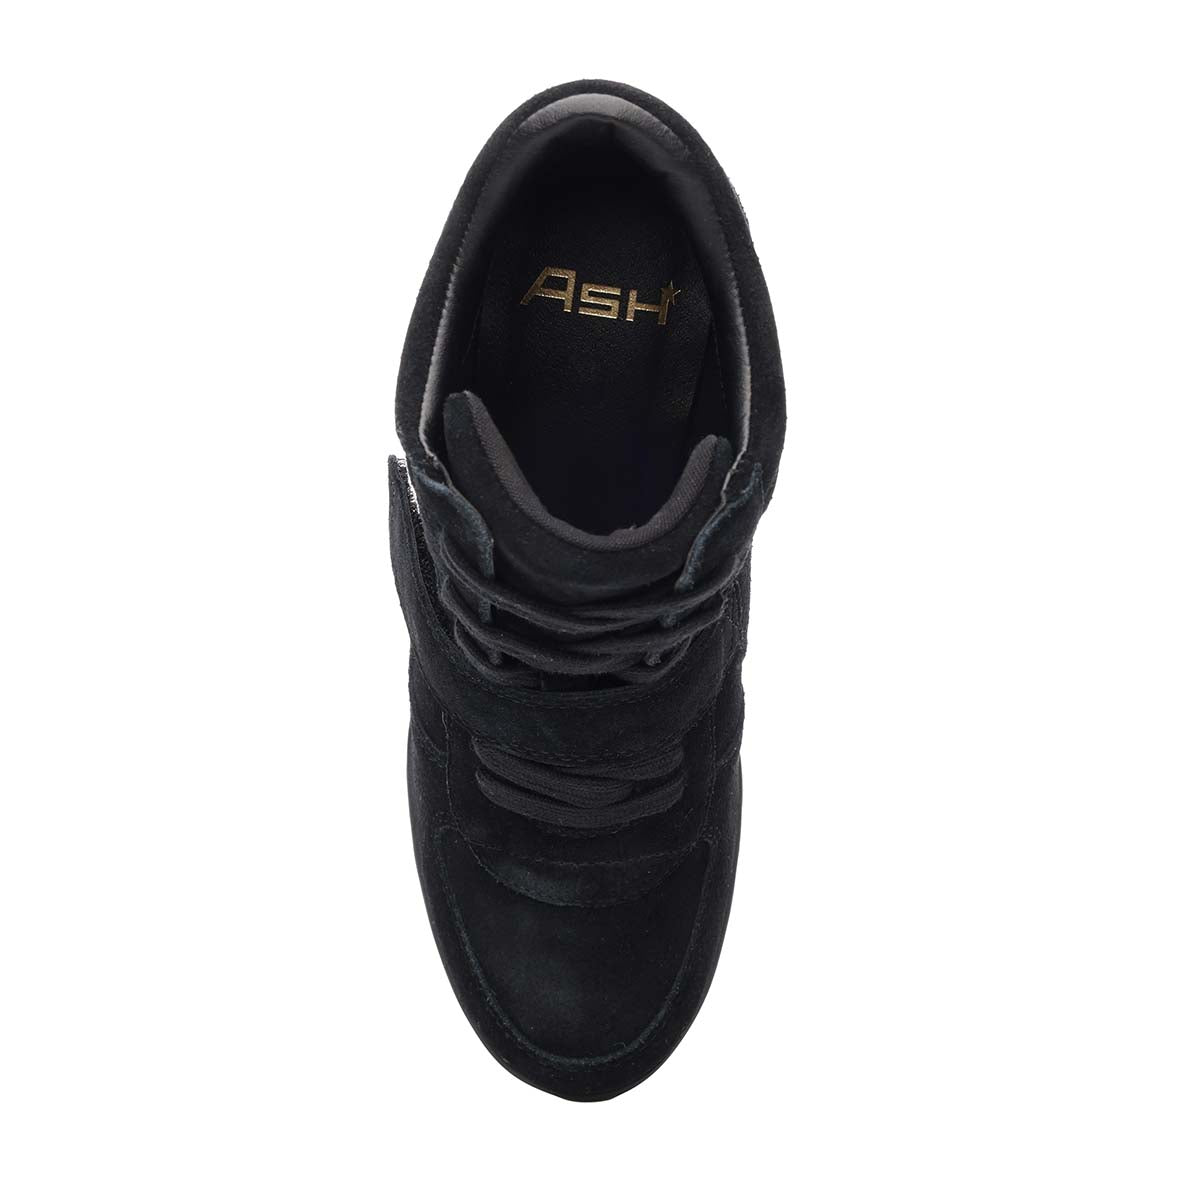 Buy Xiakolaka Wedge Sneakers for Women Hidden Heel Wedge Sneakers Lace up  Black at Amazon.in